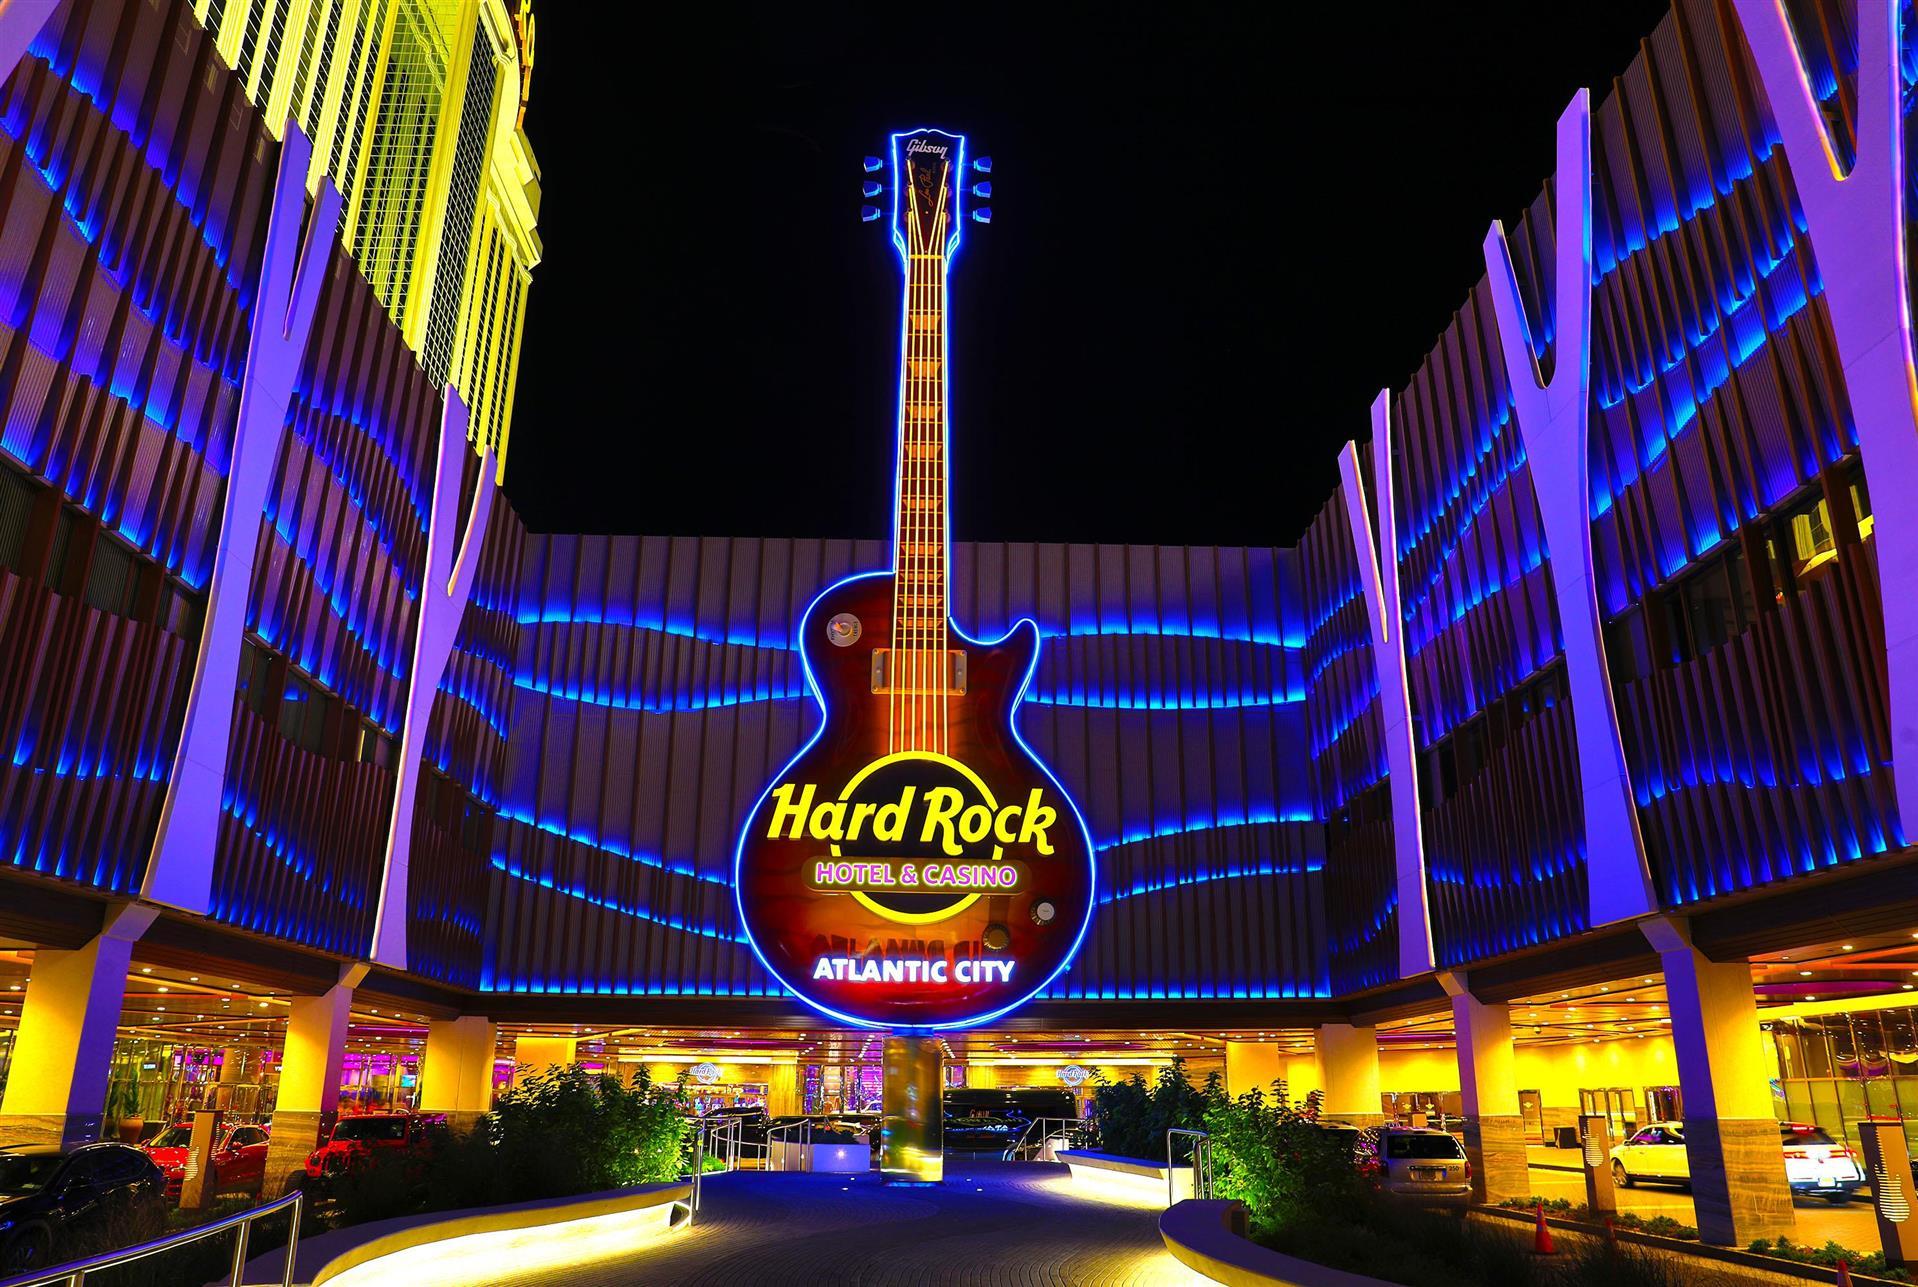 Hard Rock Hotel & Casino Atlantic City in Atlantic City, NJ